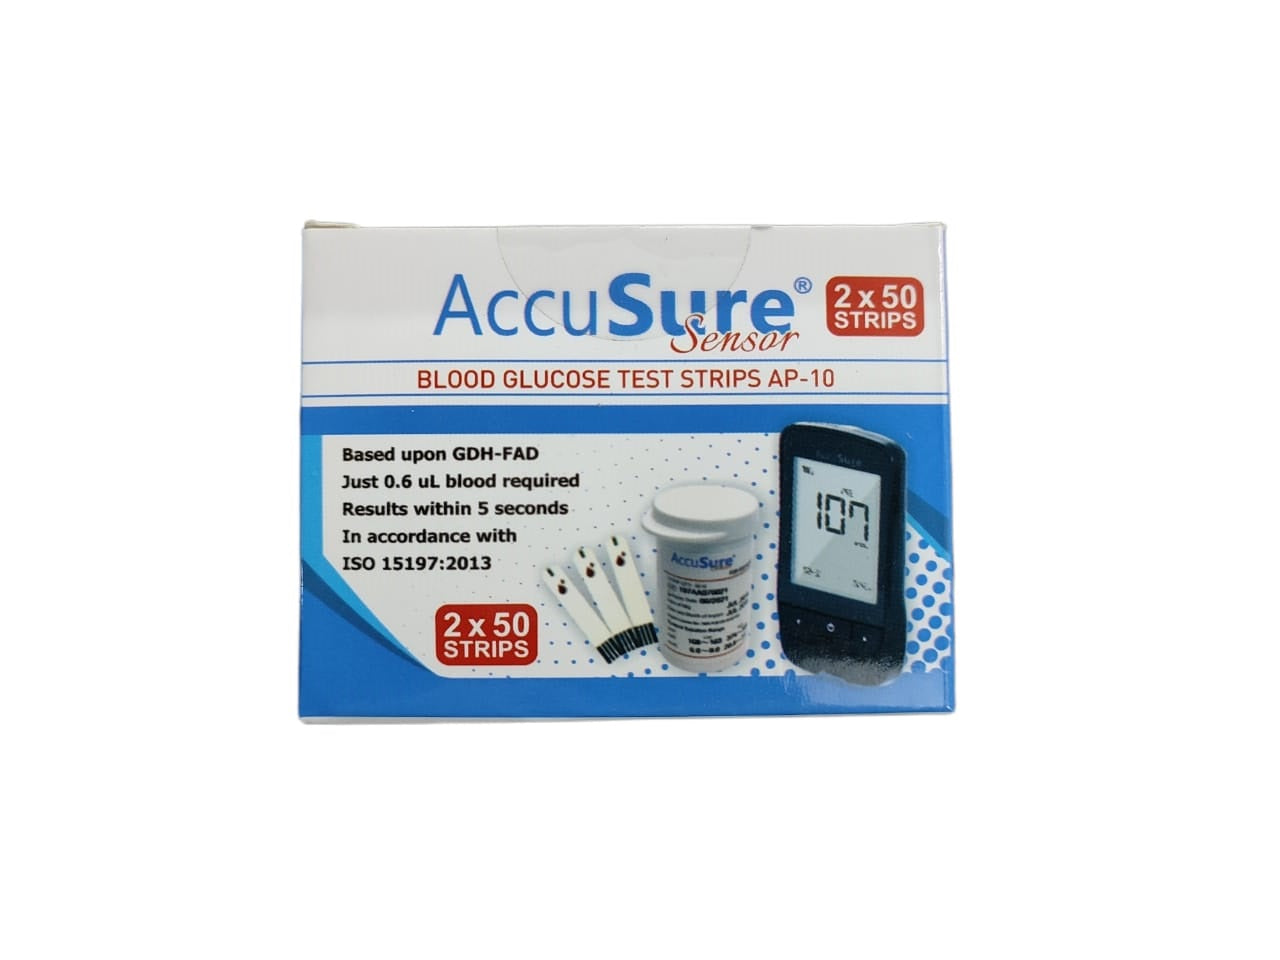 Accusure Sensor Blood Glucose Test 2x50 Strips